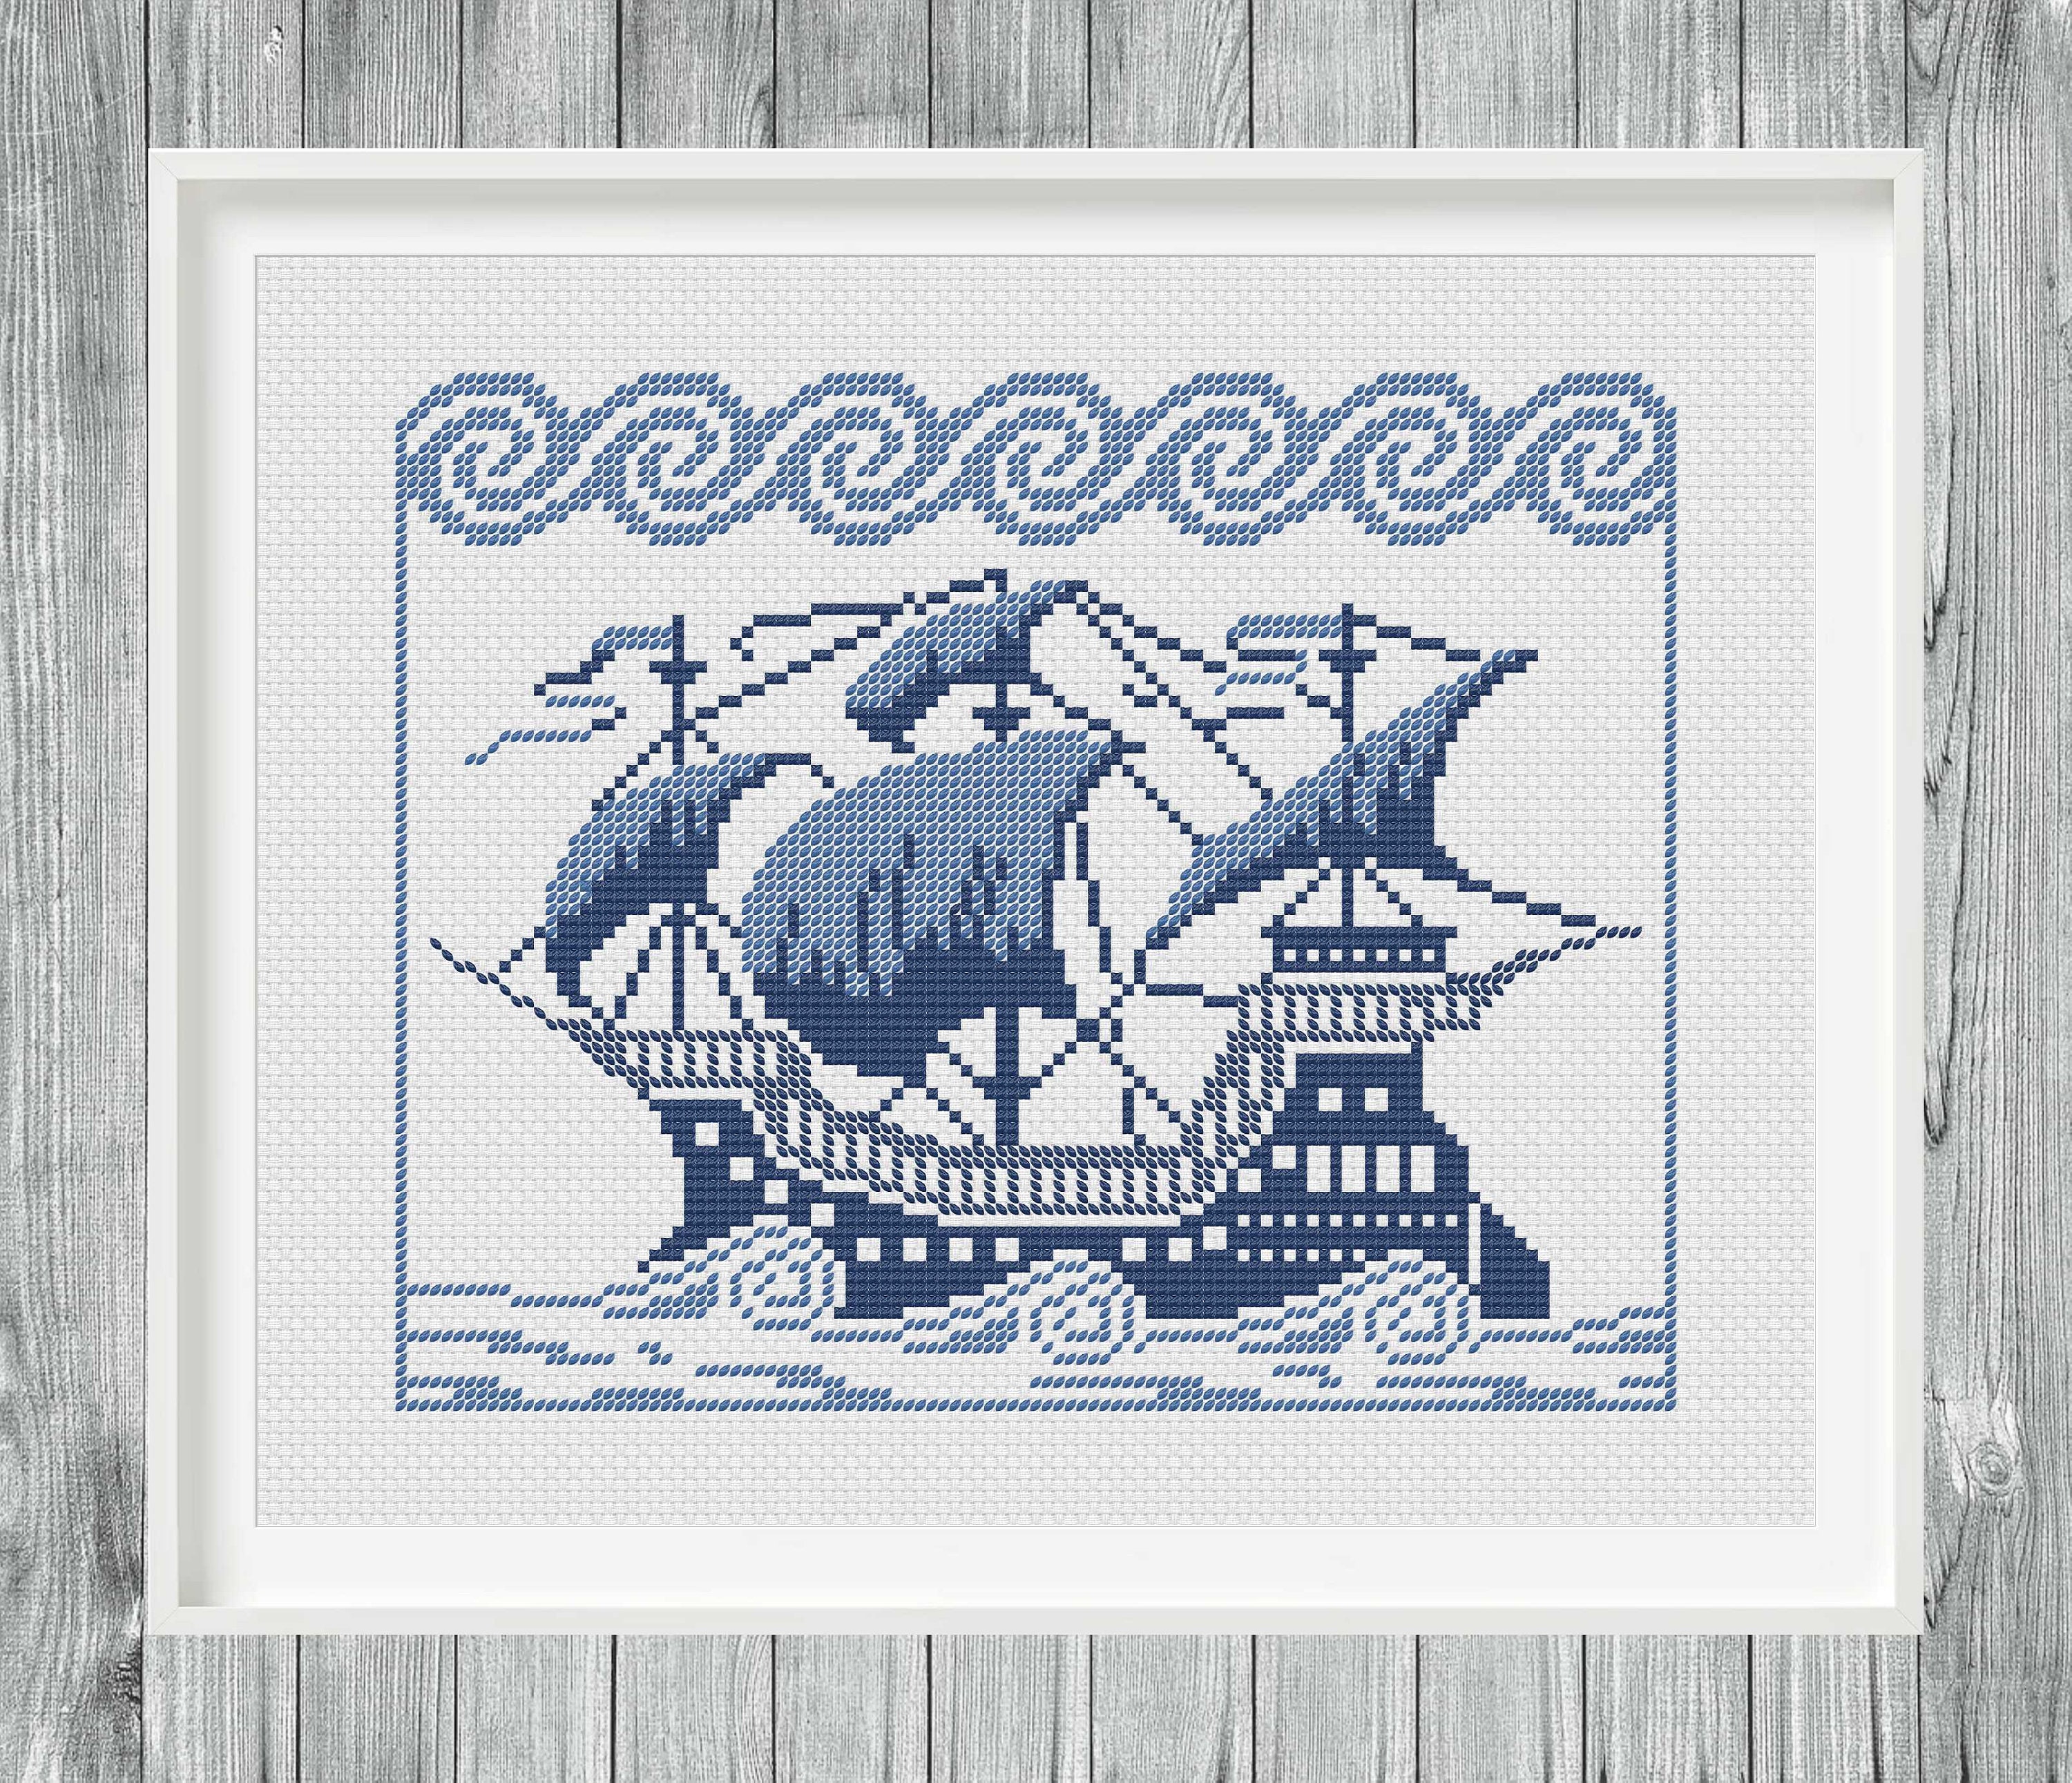 Mini Cross Stitch Embroidery Kit Sailboat